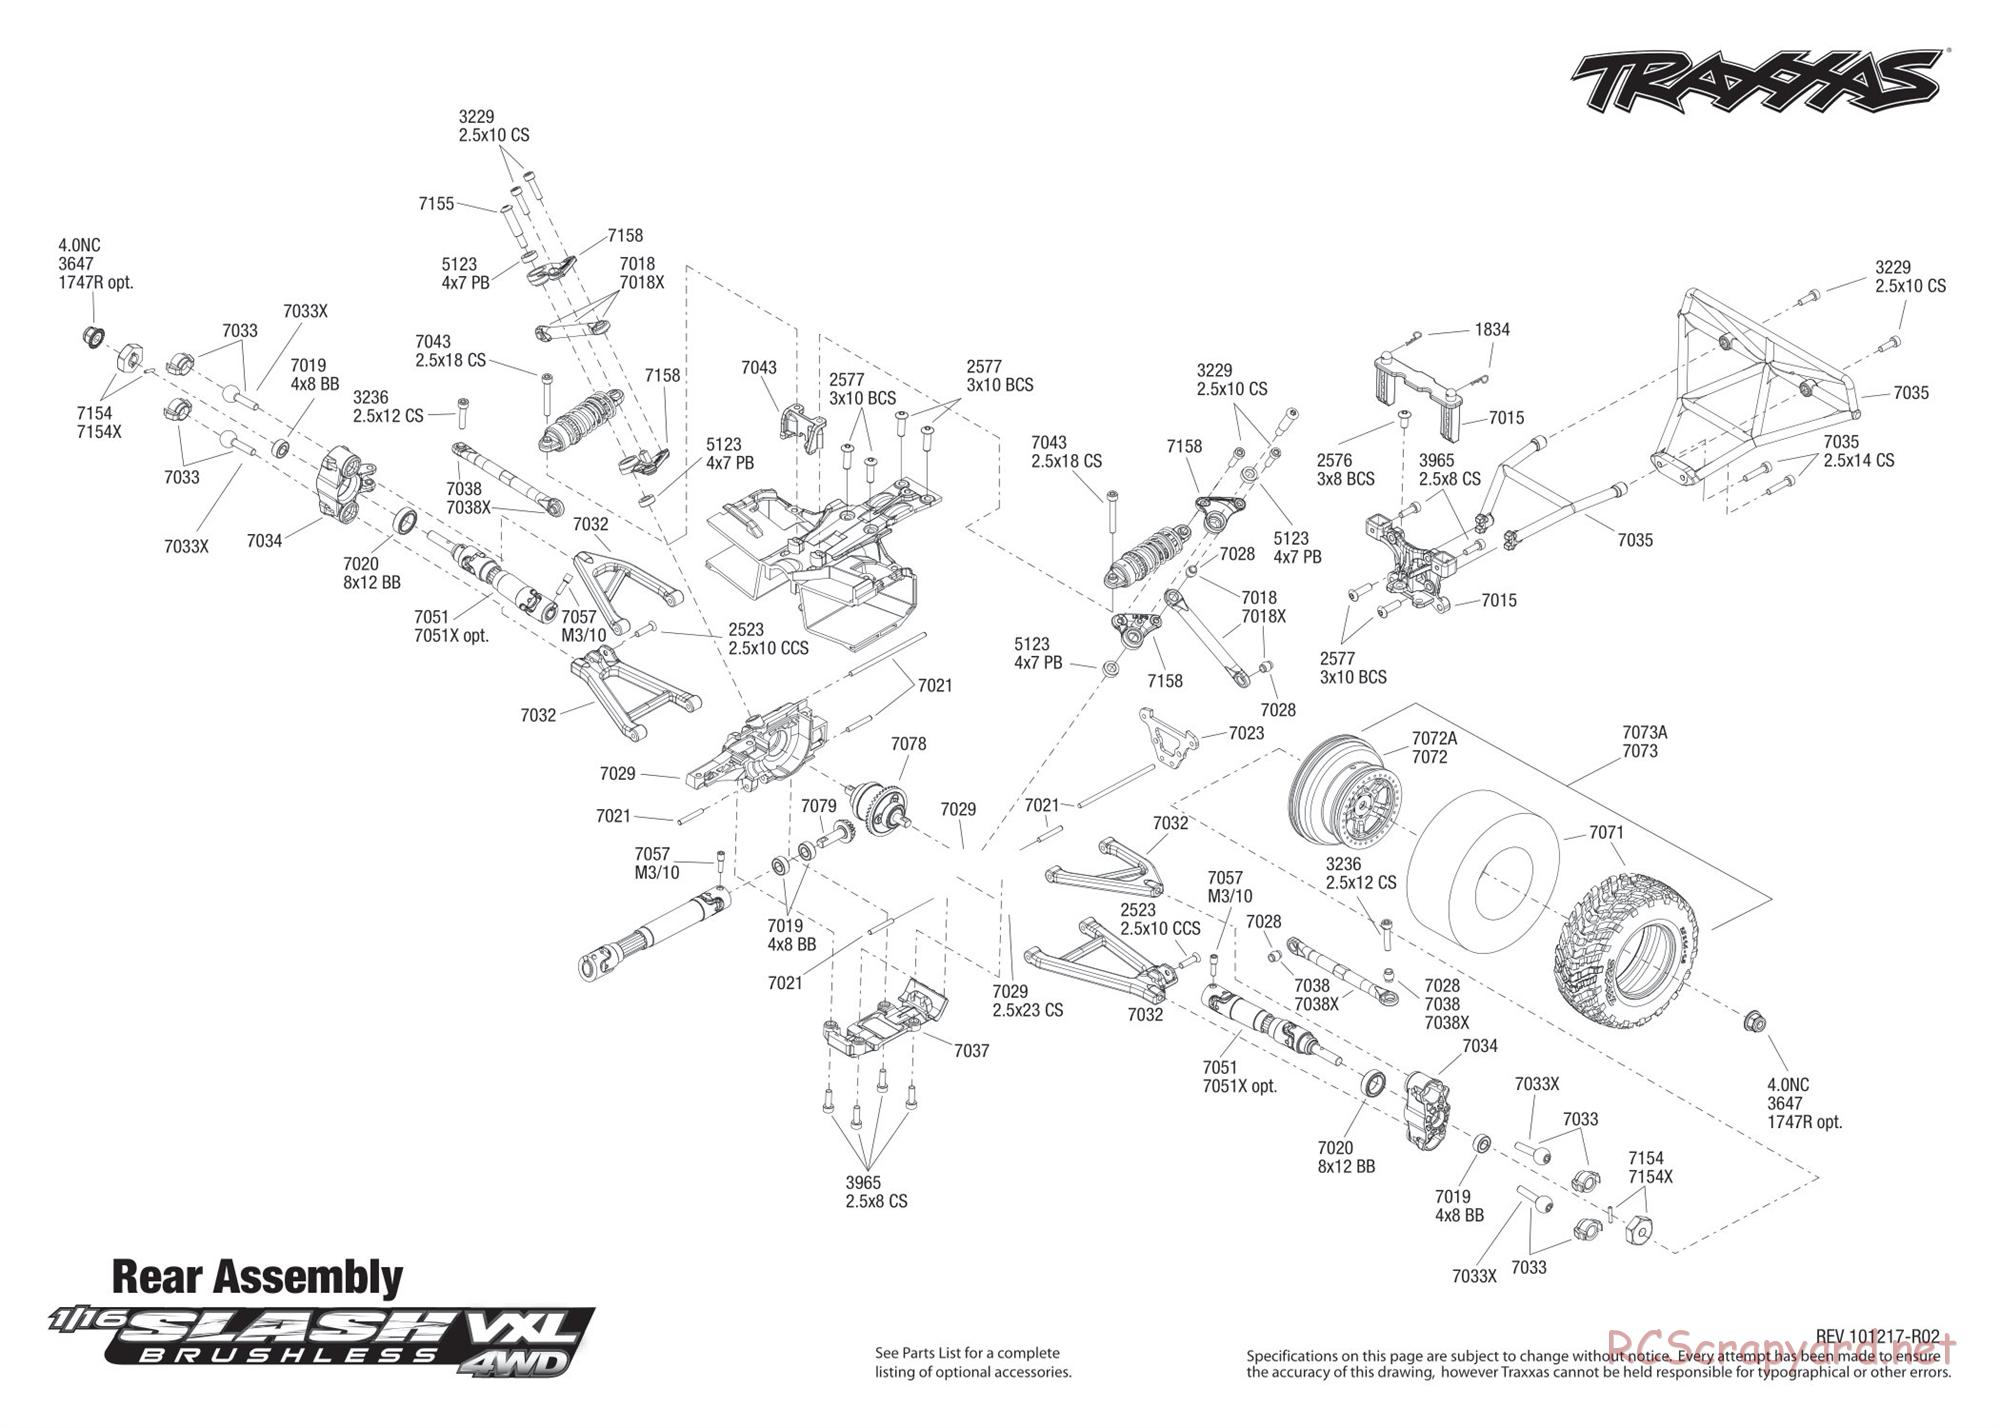 Traxxas - 1/16 Slash VXL 4WD (2009) - Exploded Views - Page 3